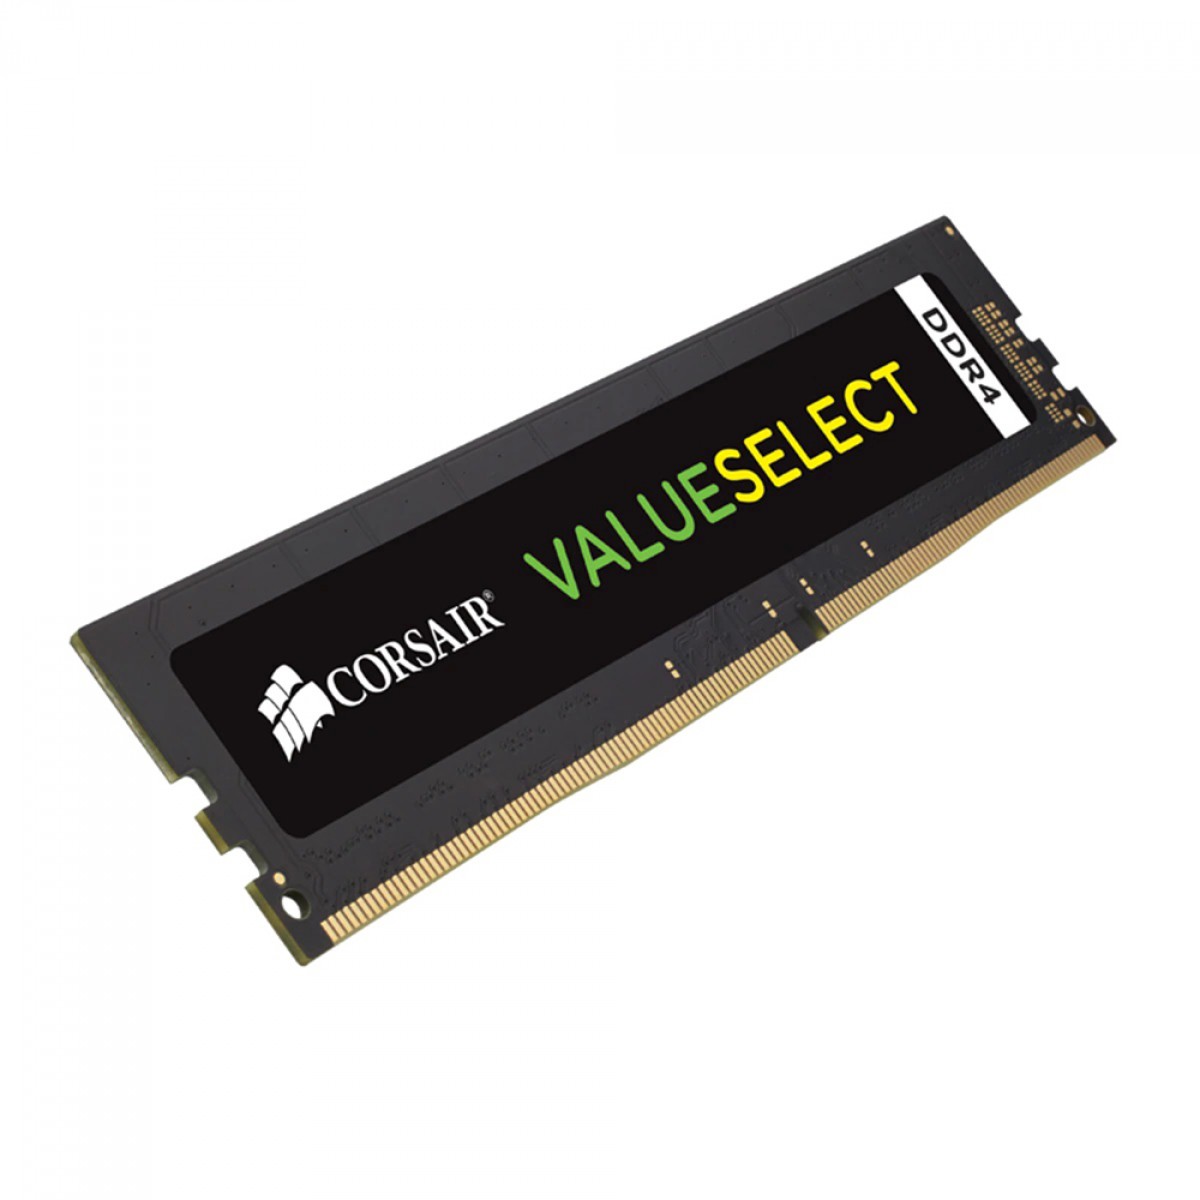 Memória DDR4 Corsair Value Select, 8GB, 2666MHz, Black, CMV8GX4M1A2666C18